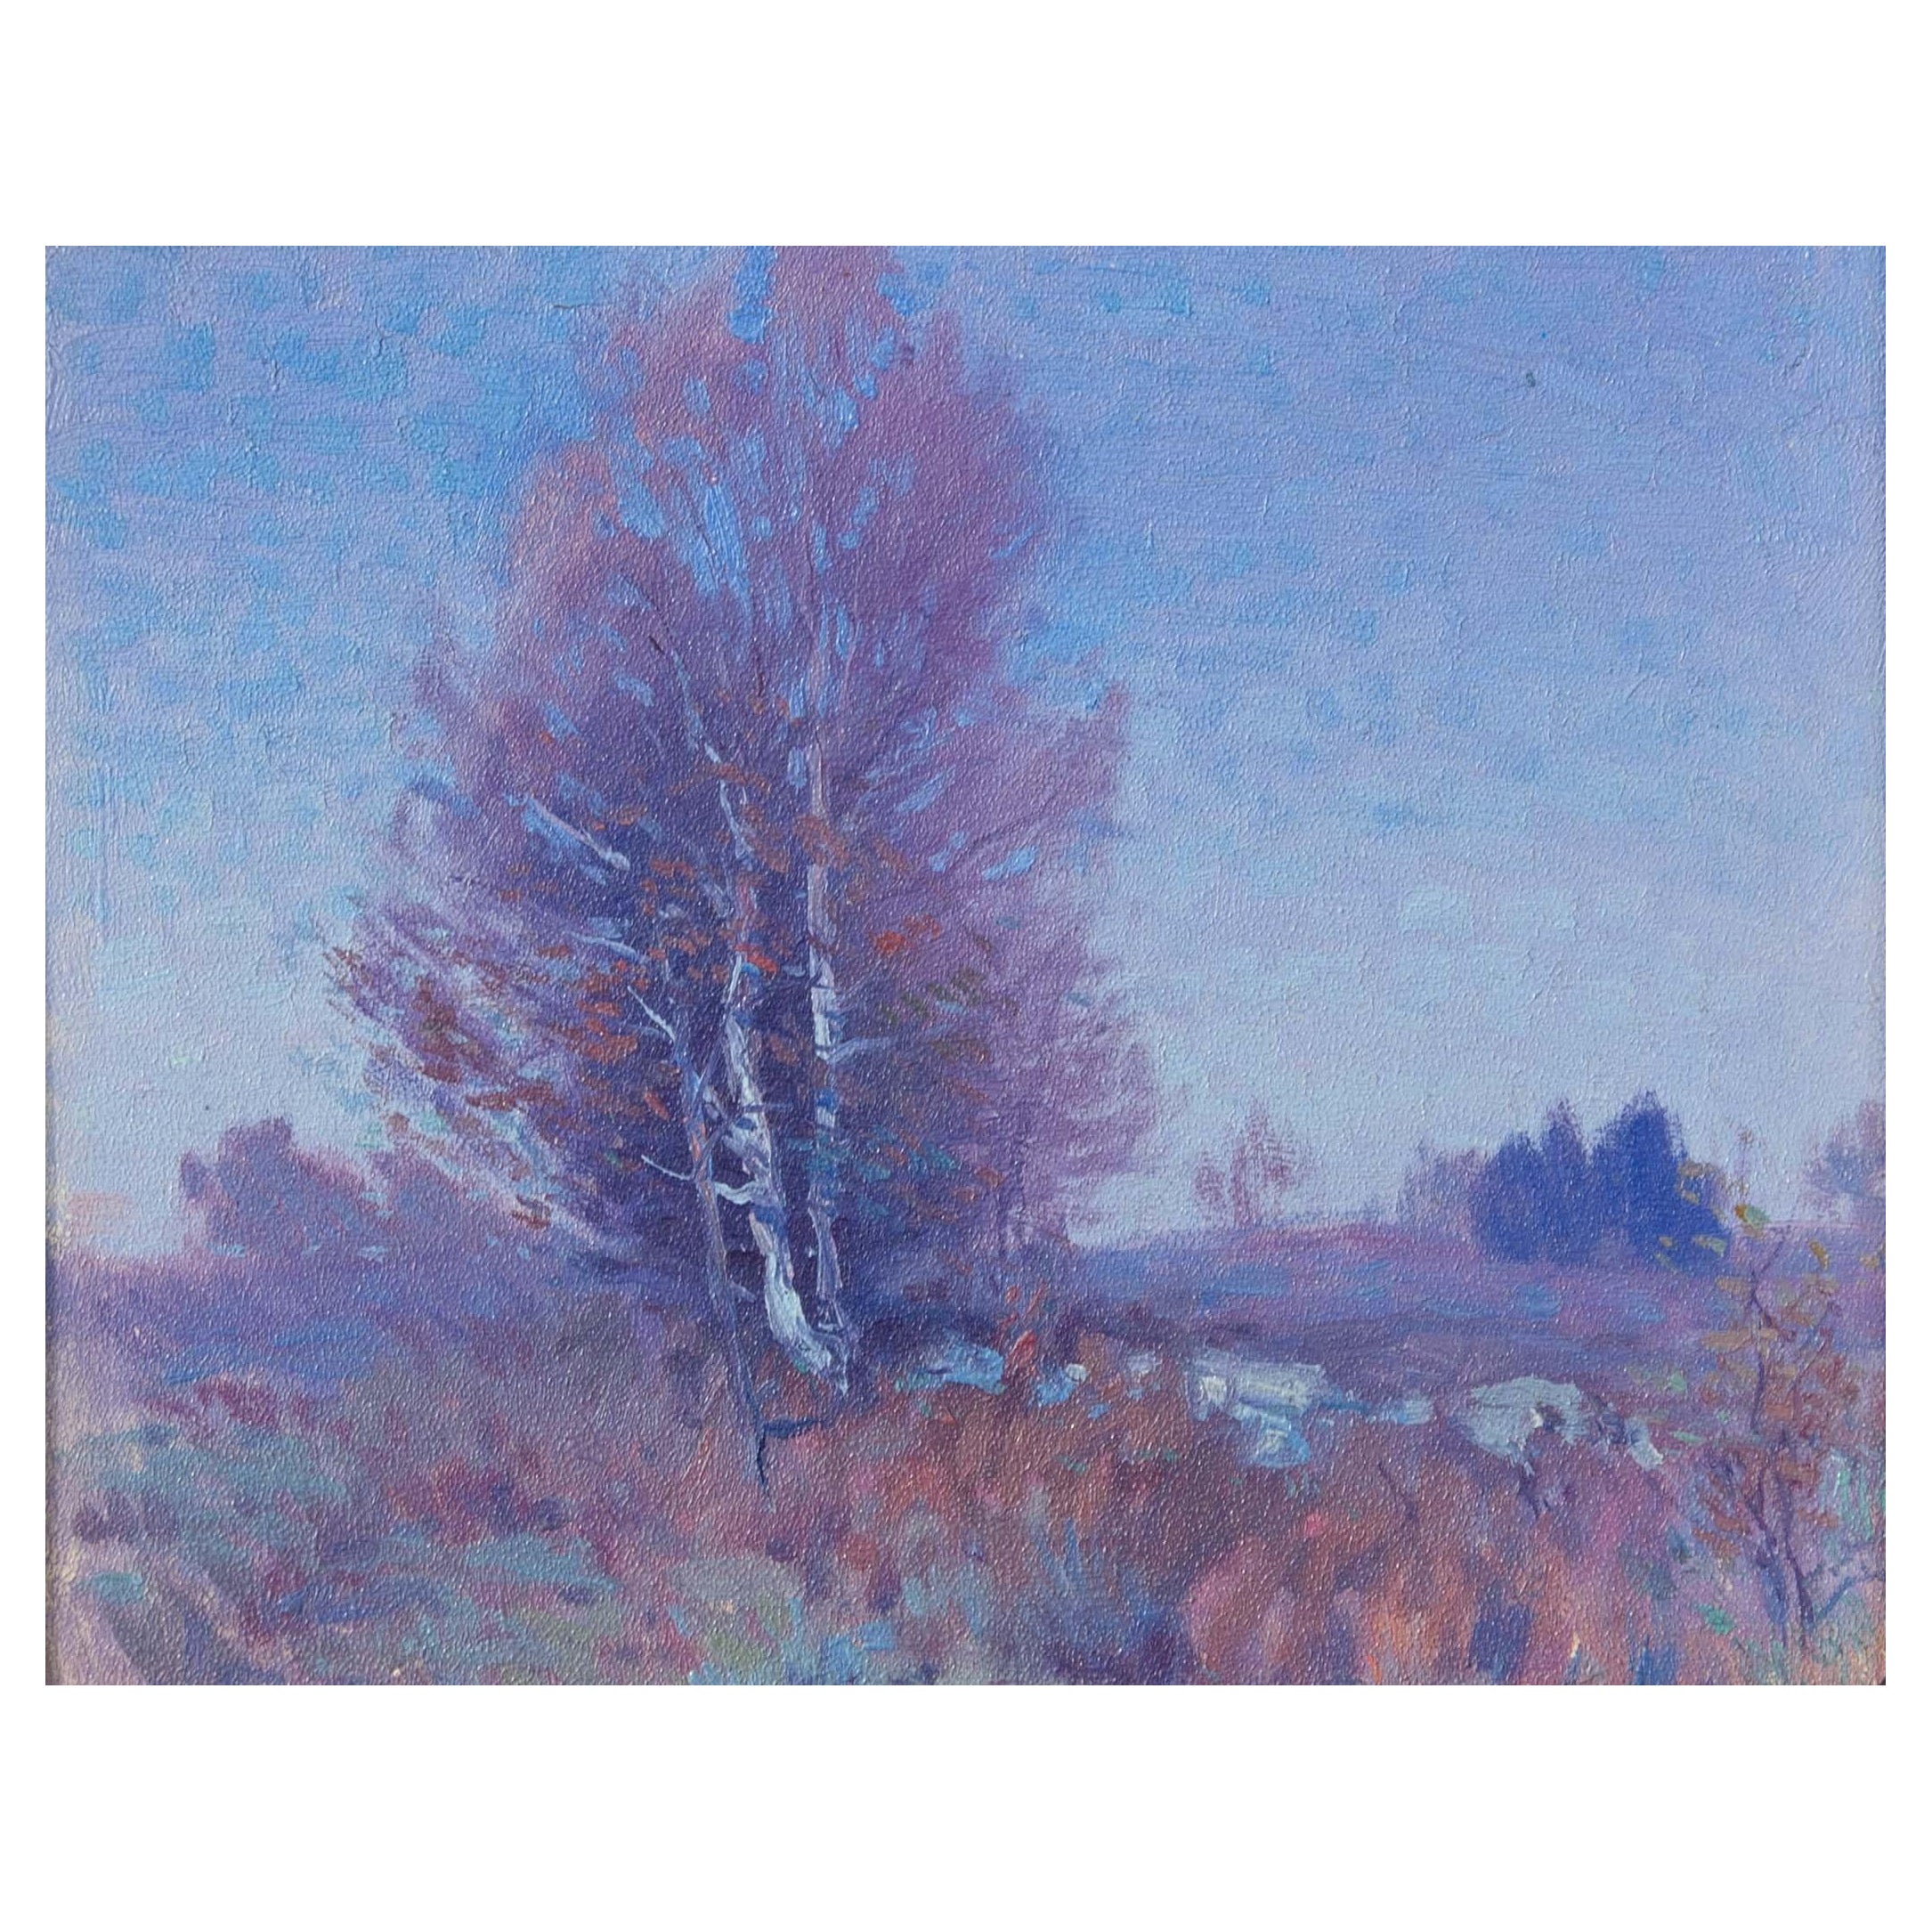 Paysage impressionniste  Twilight de l'artiste américain George Renouard, daté de 1916